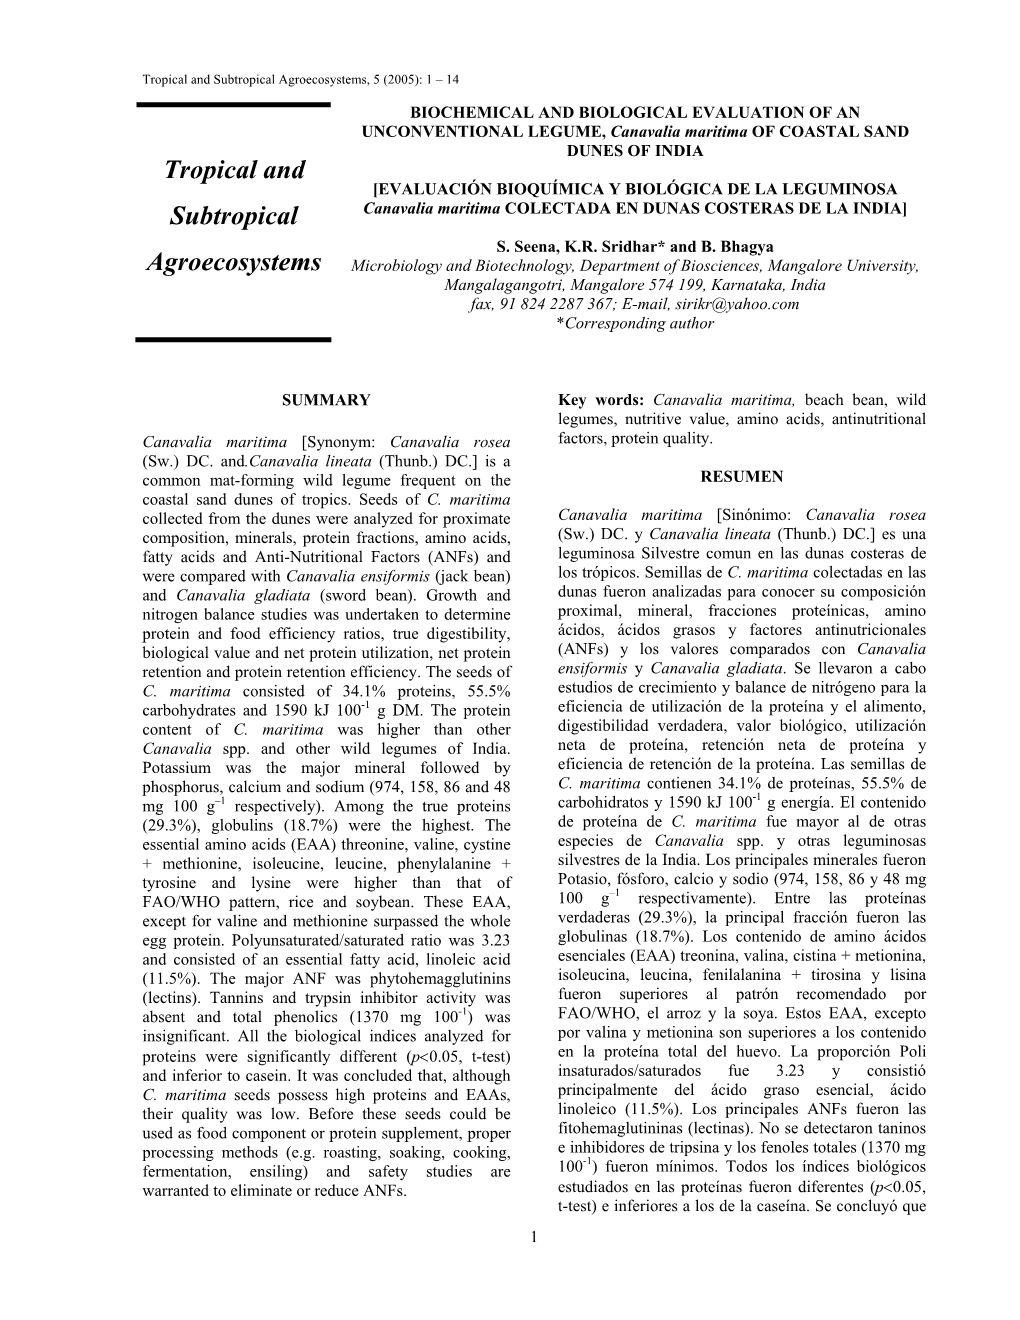 BIOCHEMICAL and BIOLOGICAL EVALUATION of an UNCONVENTIONAL LEGUME, Canavalia Maritima of COASTAL SAND DUNES of INDIA